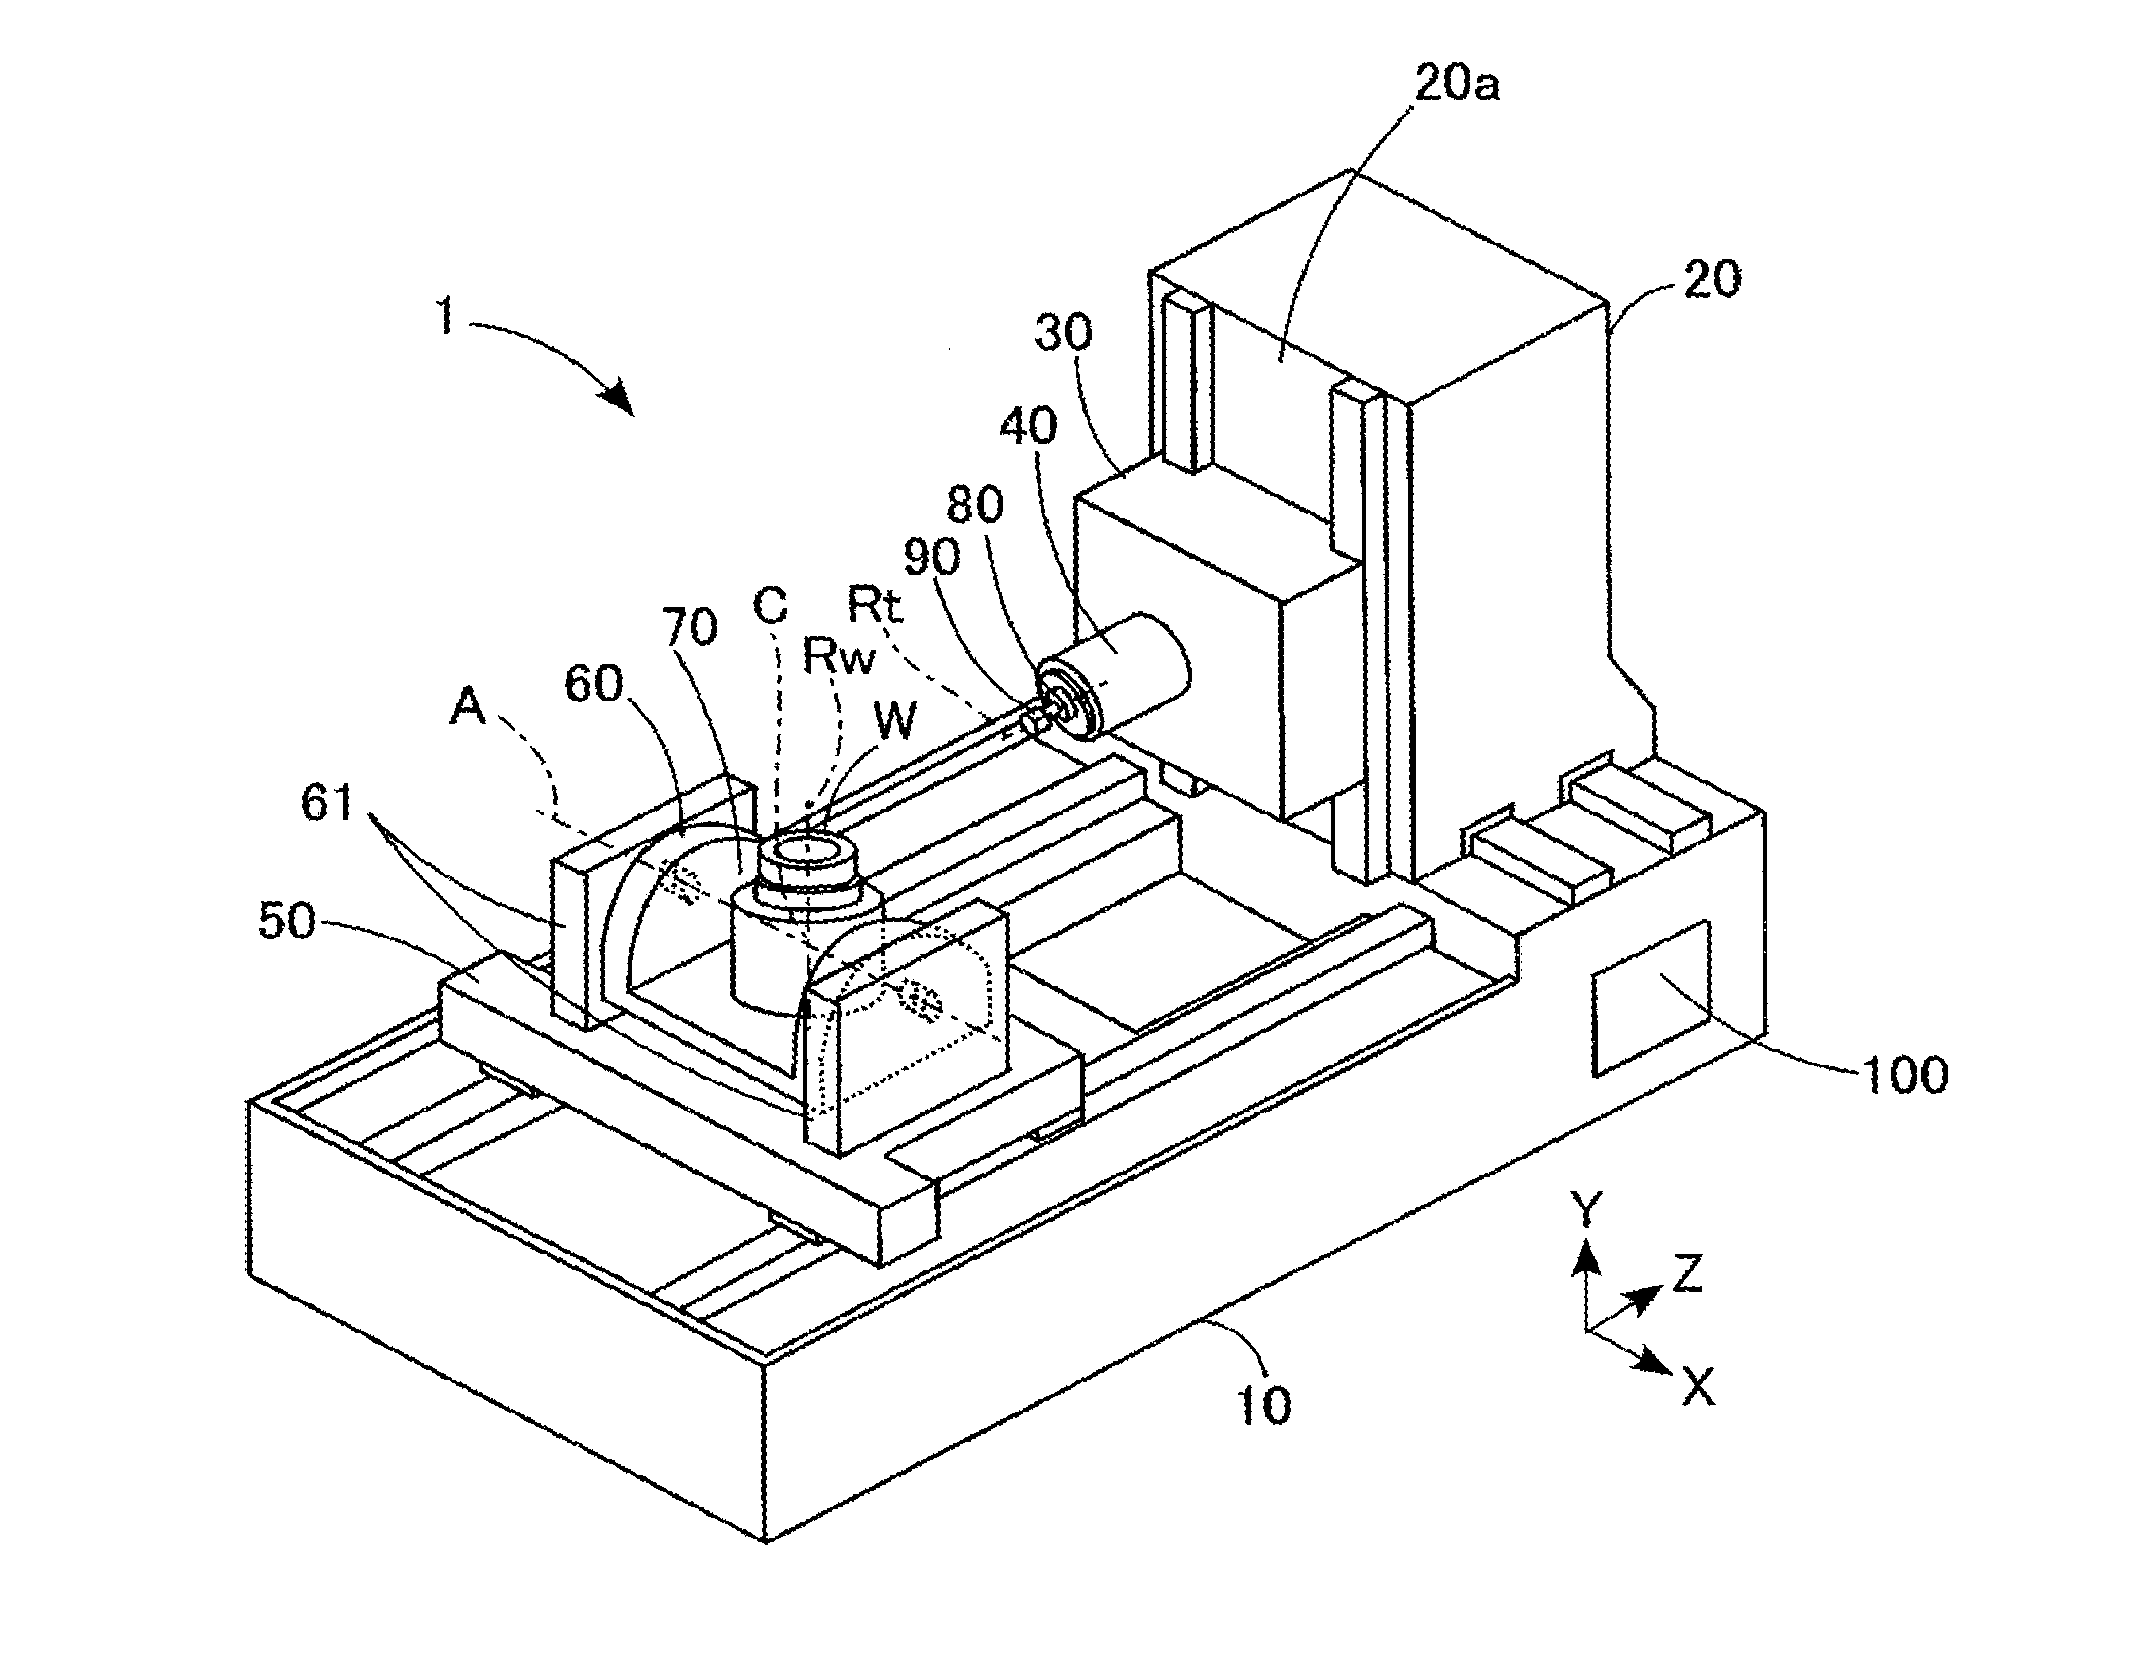 Gear machining apparatus